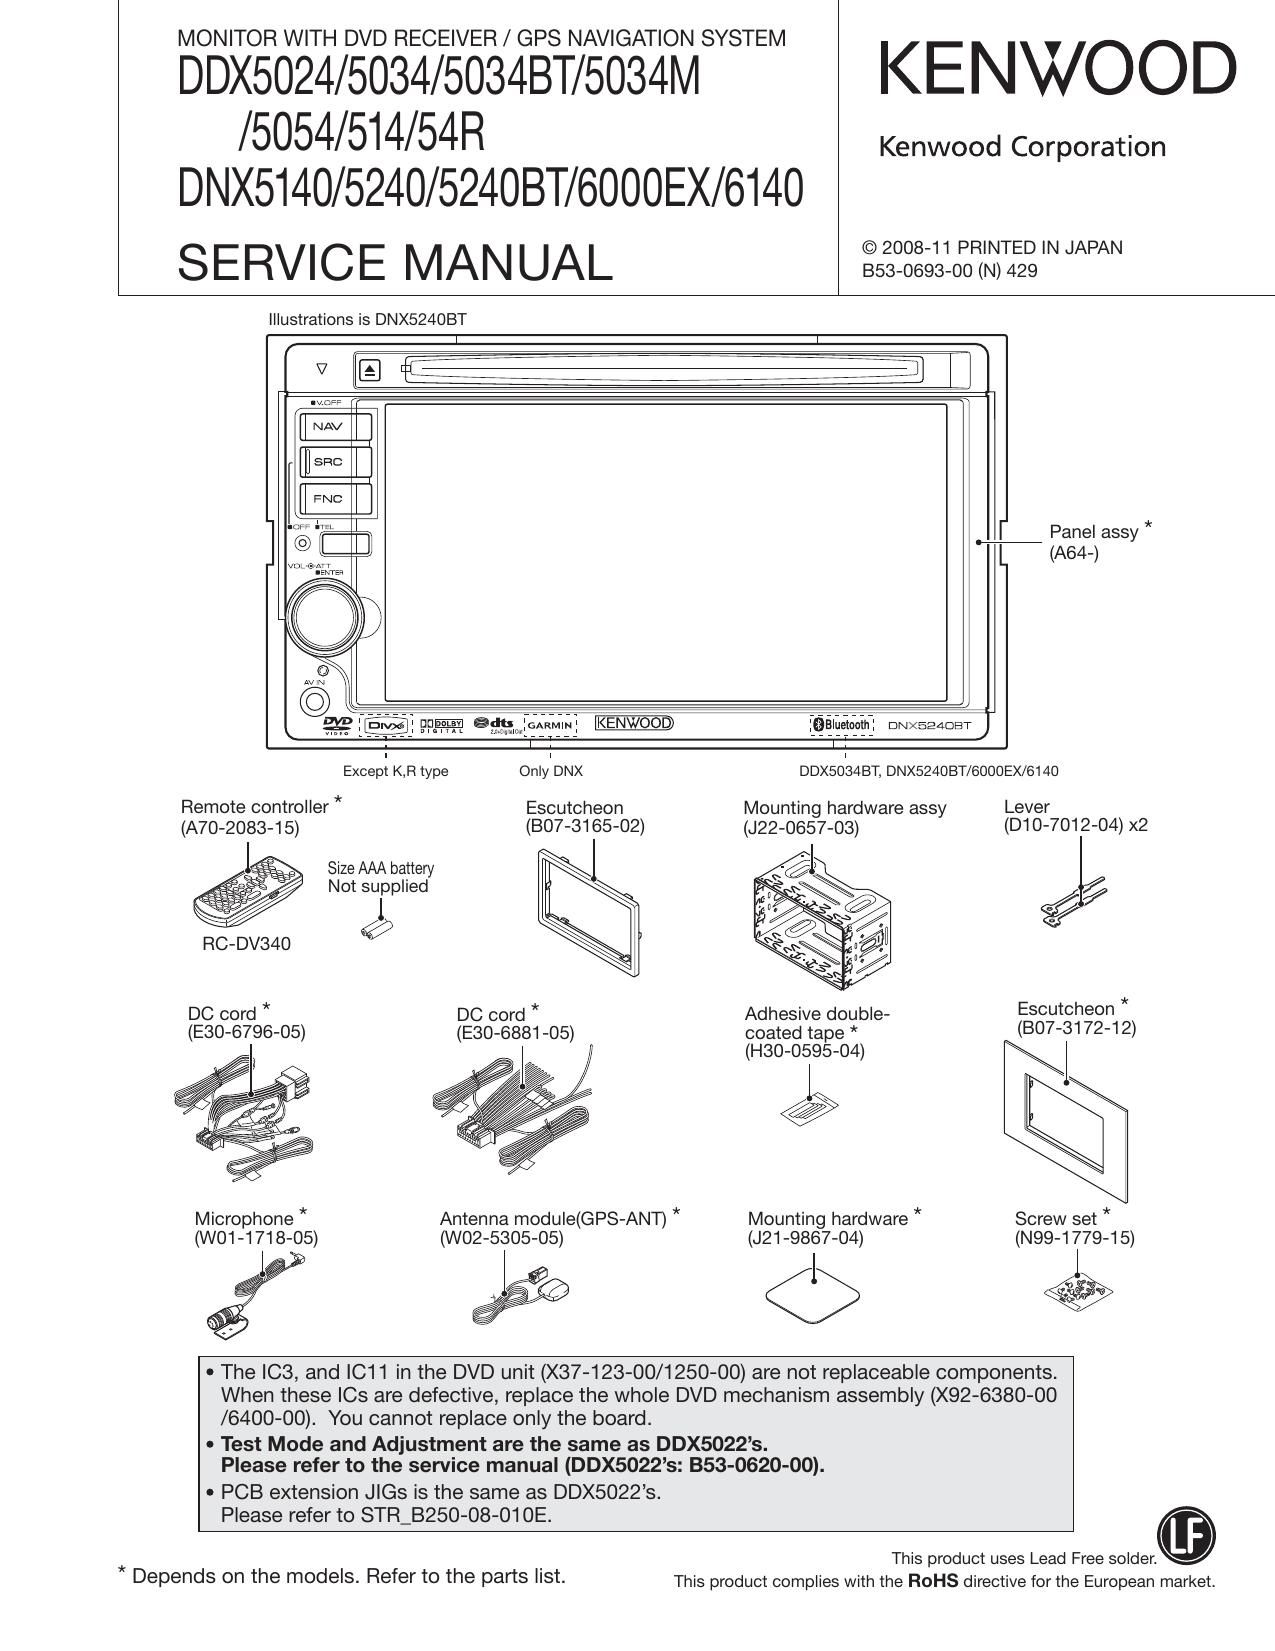 Kenwood DNX 5240 Service Manual